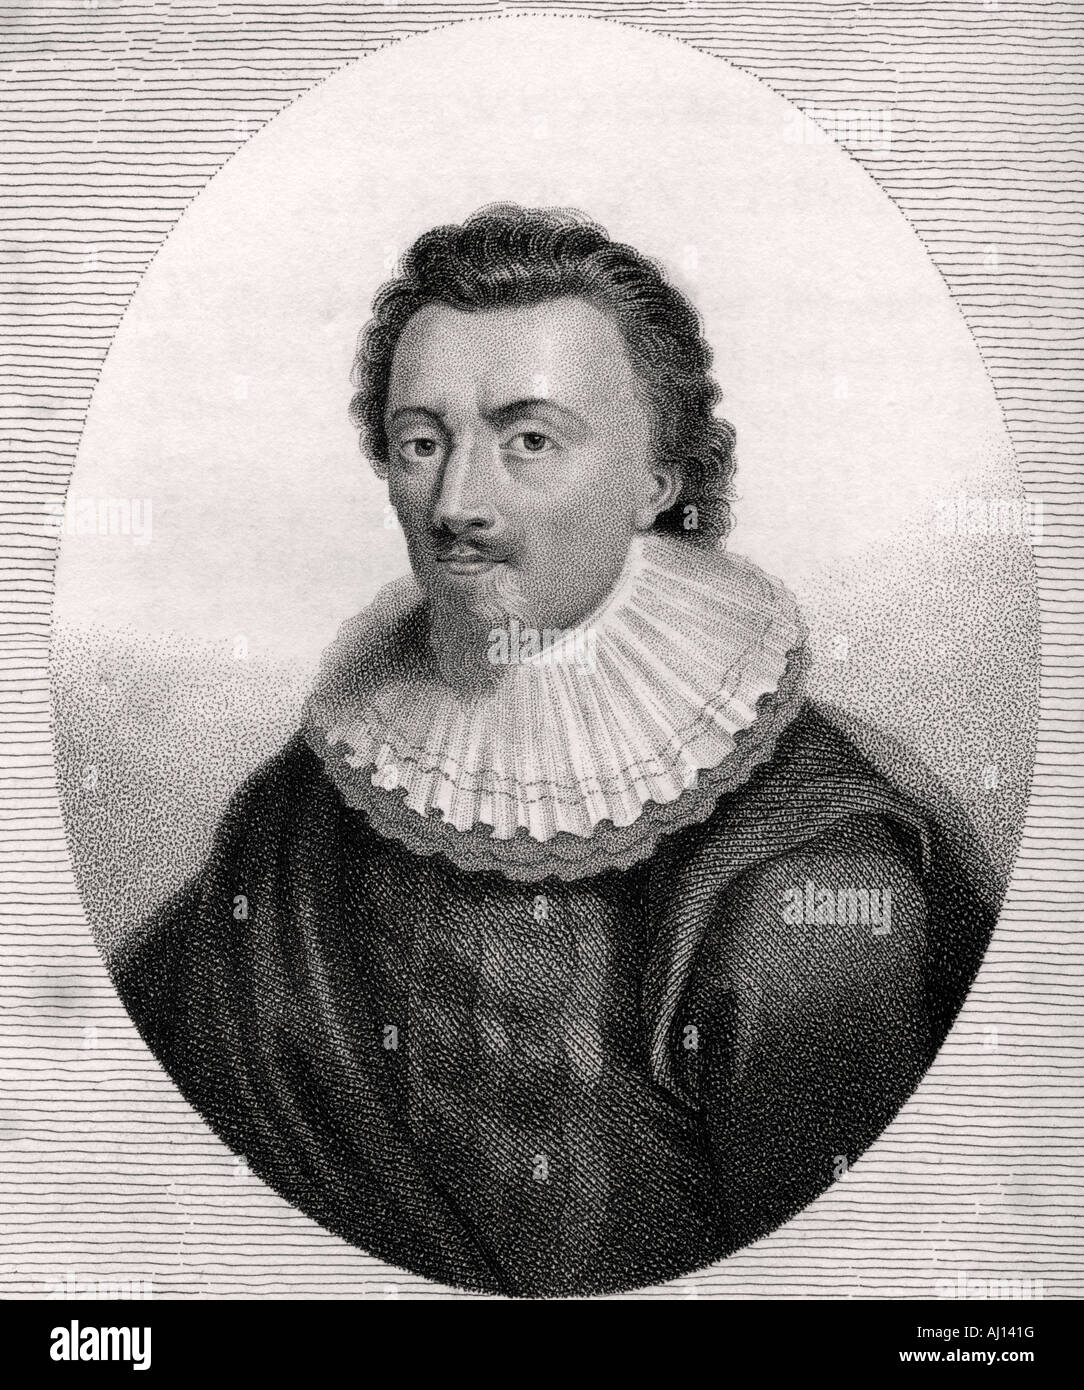 George Calvert, 1st Baron Baltimore, c.1580 - 1632. English politician and coloniser. Stock Photo